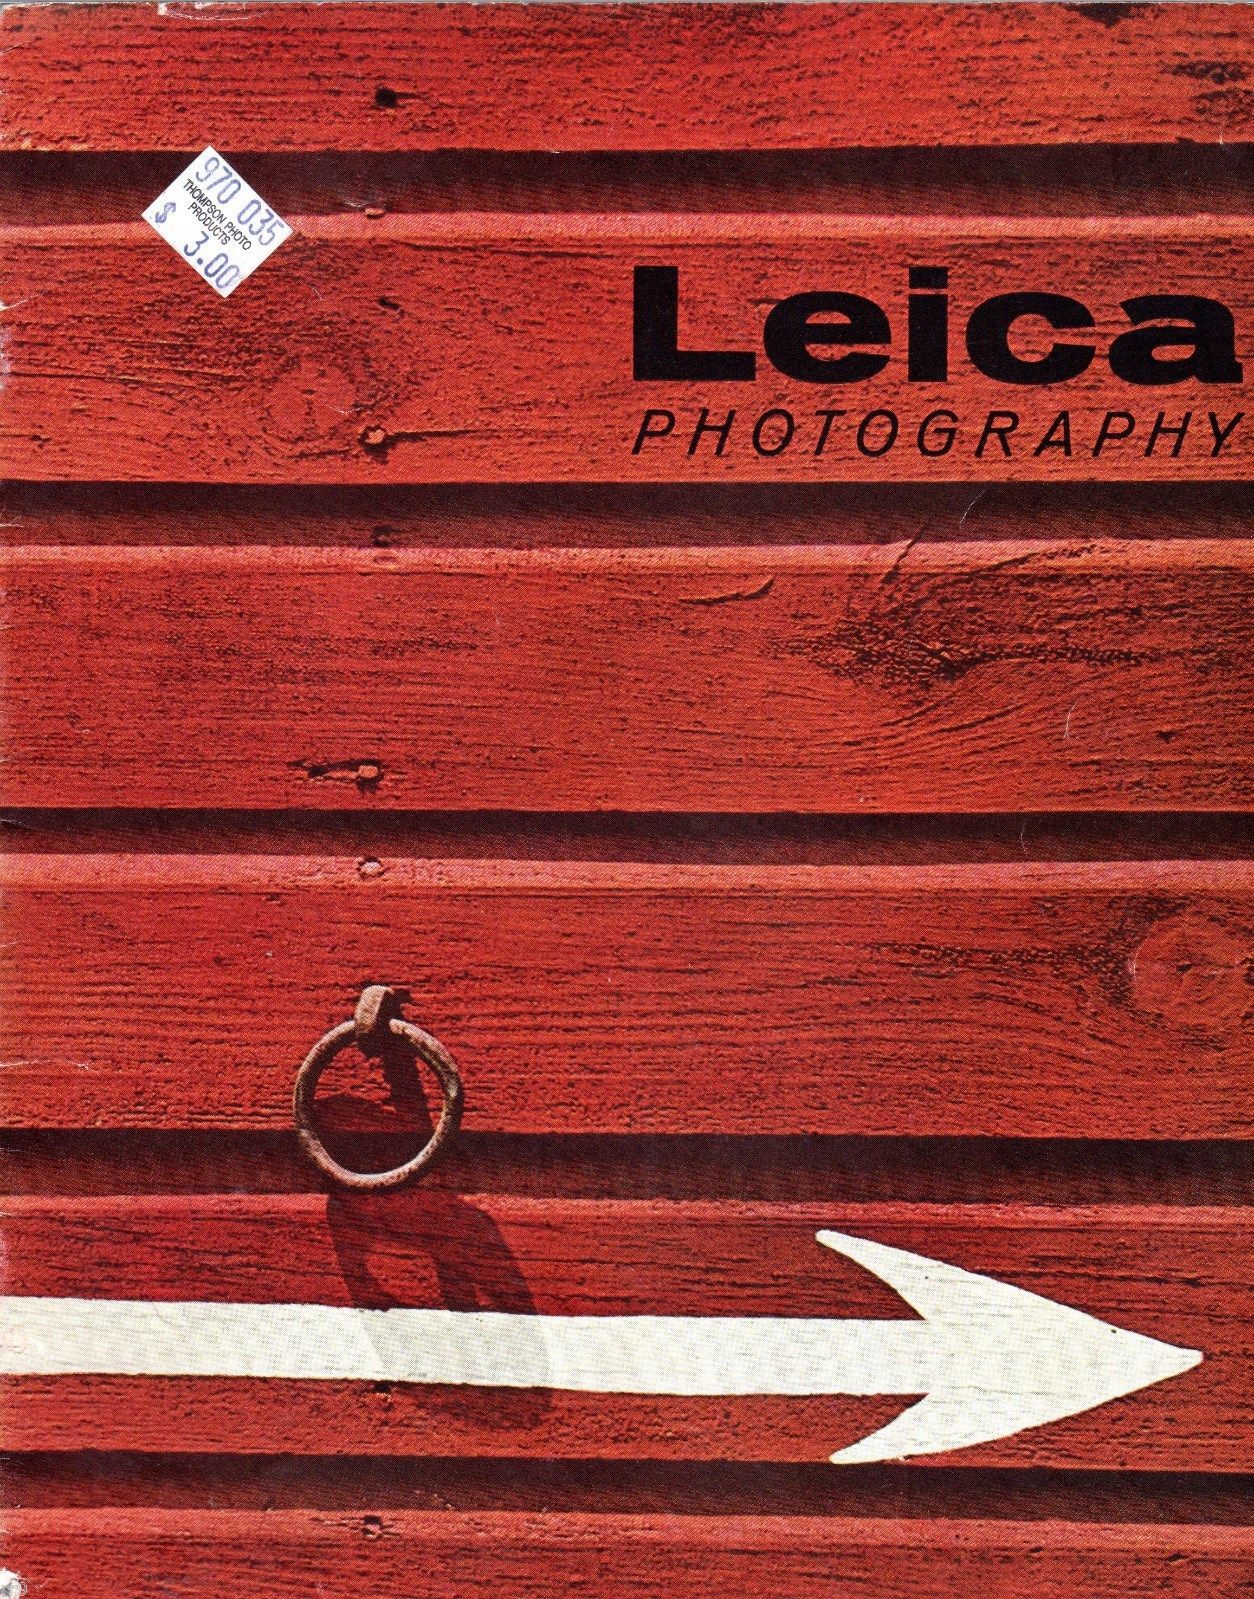 LEICA Photography Magazine Fall 1956 Vol.9 No.3 - $2.50